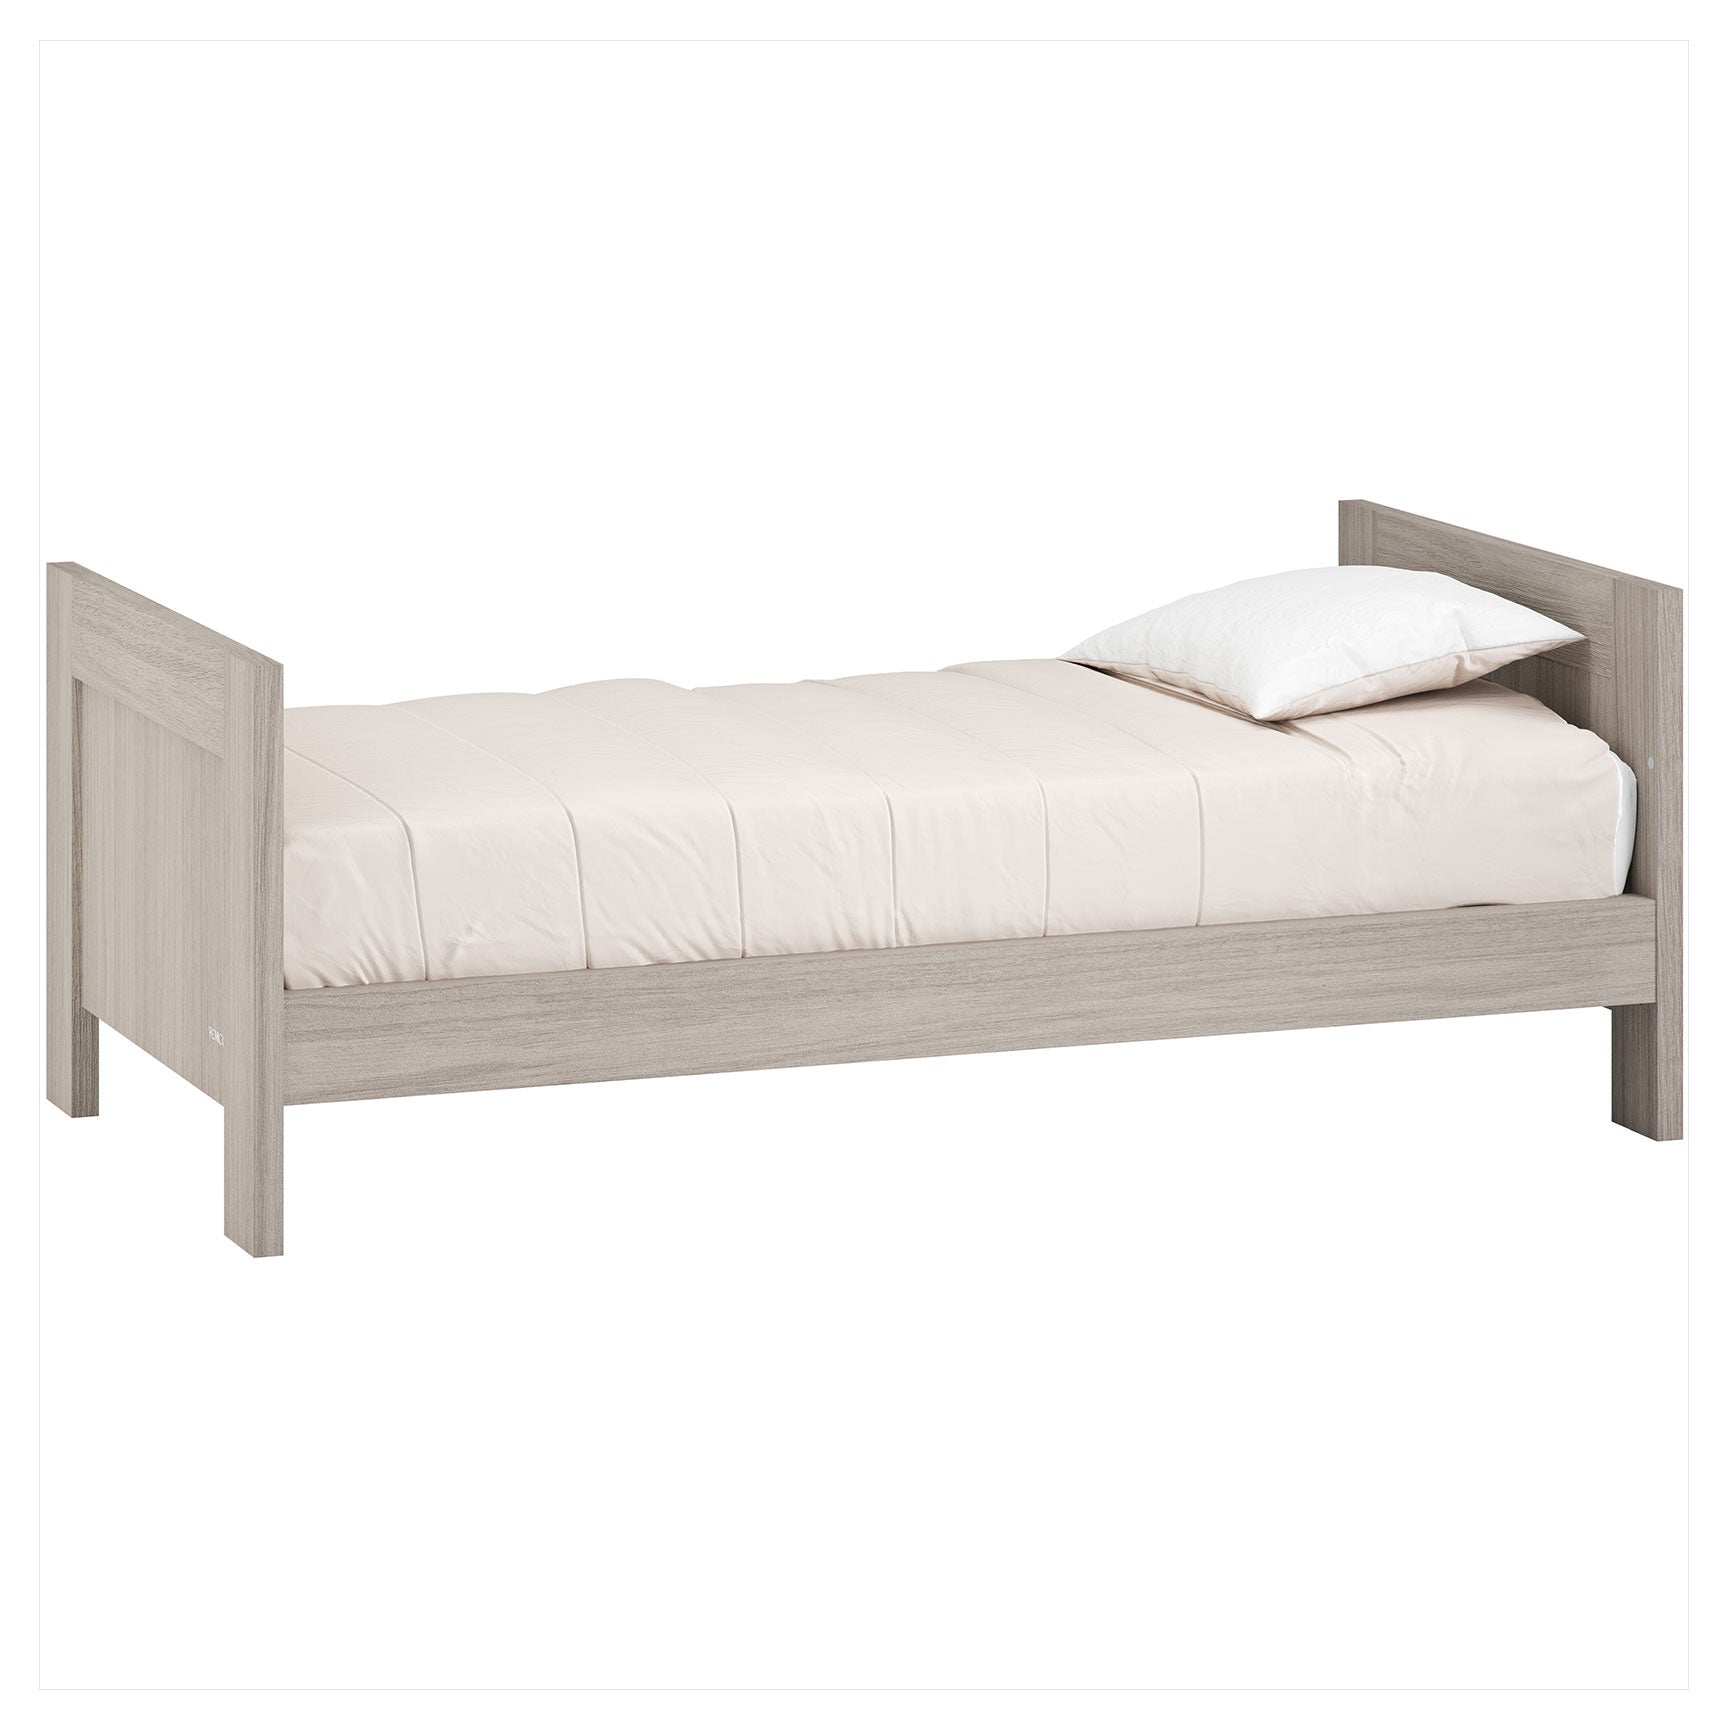 Venicci Cot Beds Venicci Forenzo Nordic White Oak Cot Bed with Drawer in Nordic White